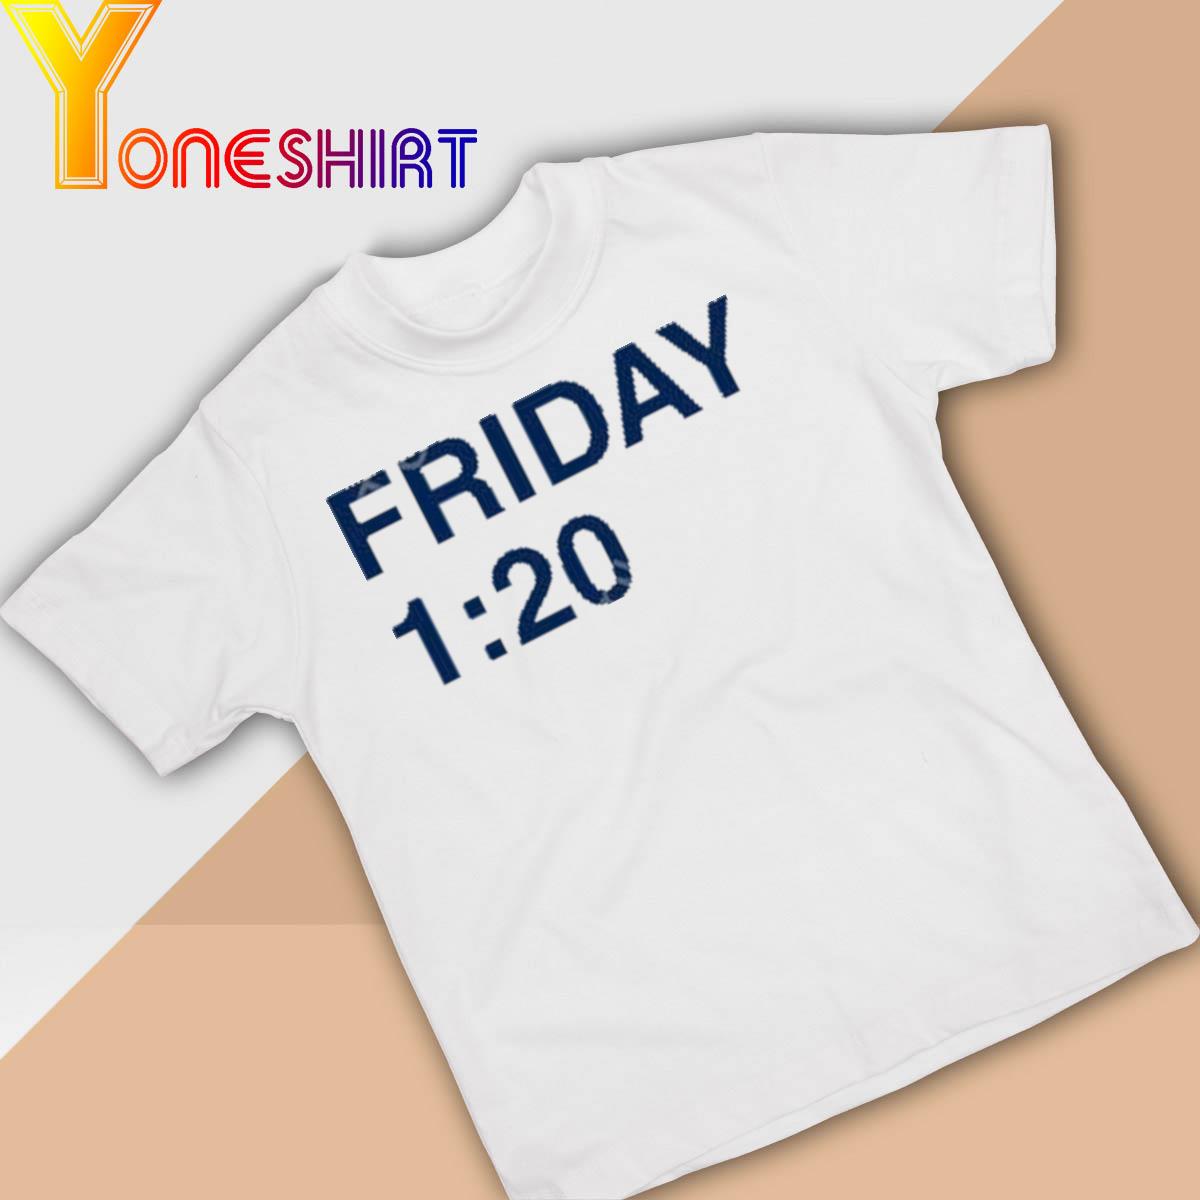 Friday 1 20 New Shirt